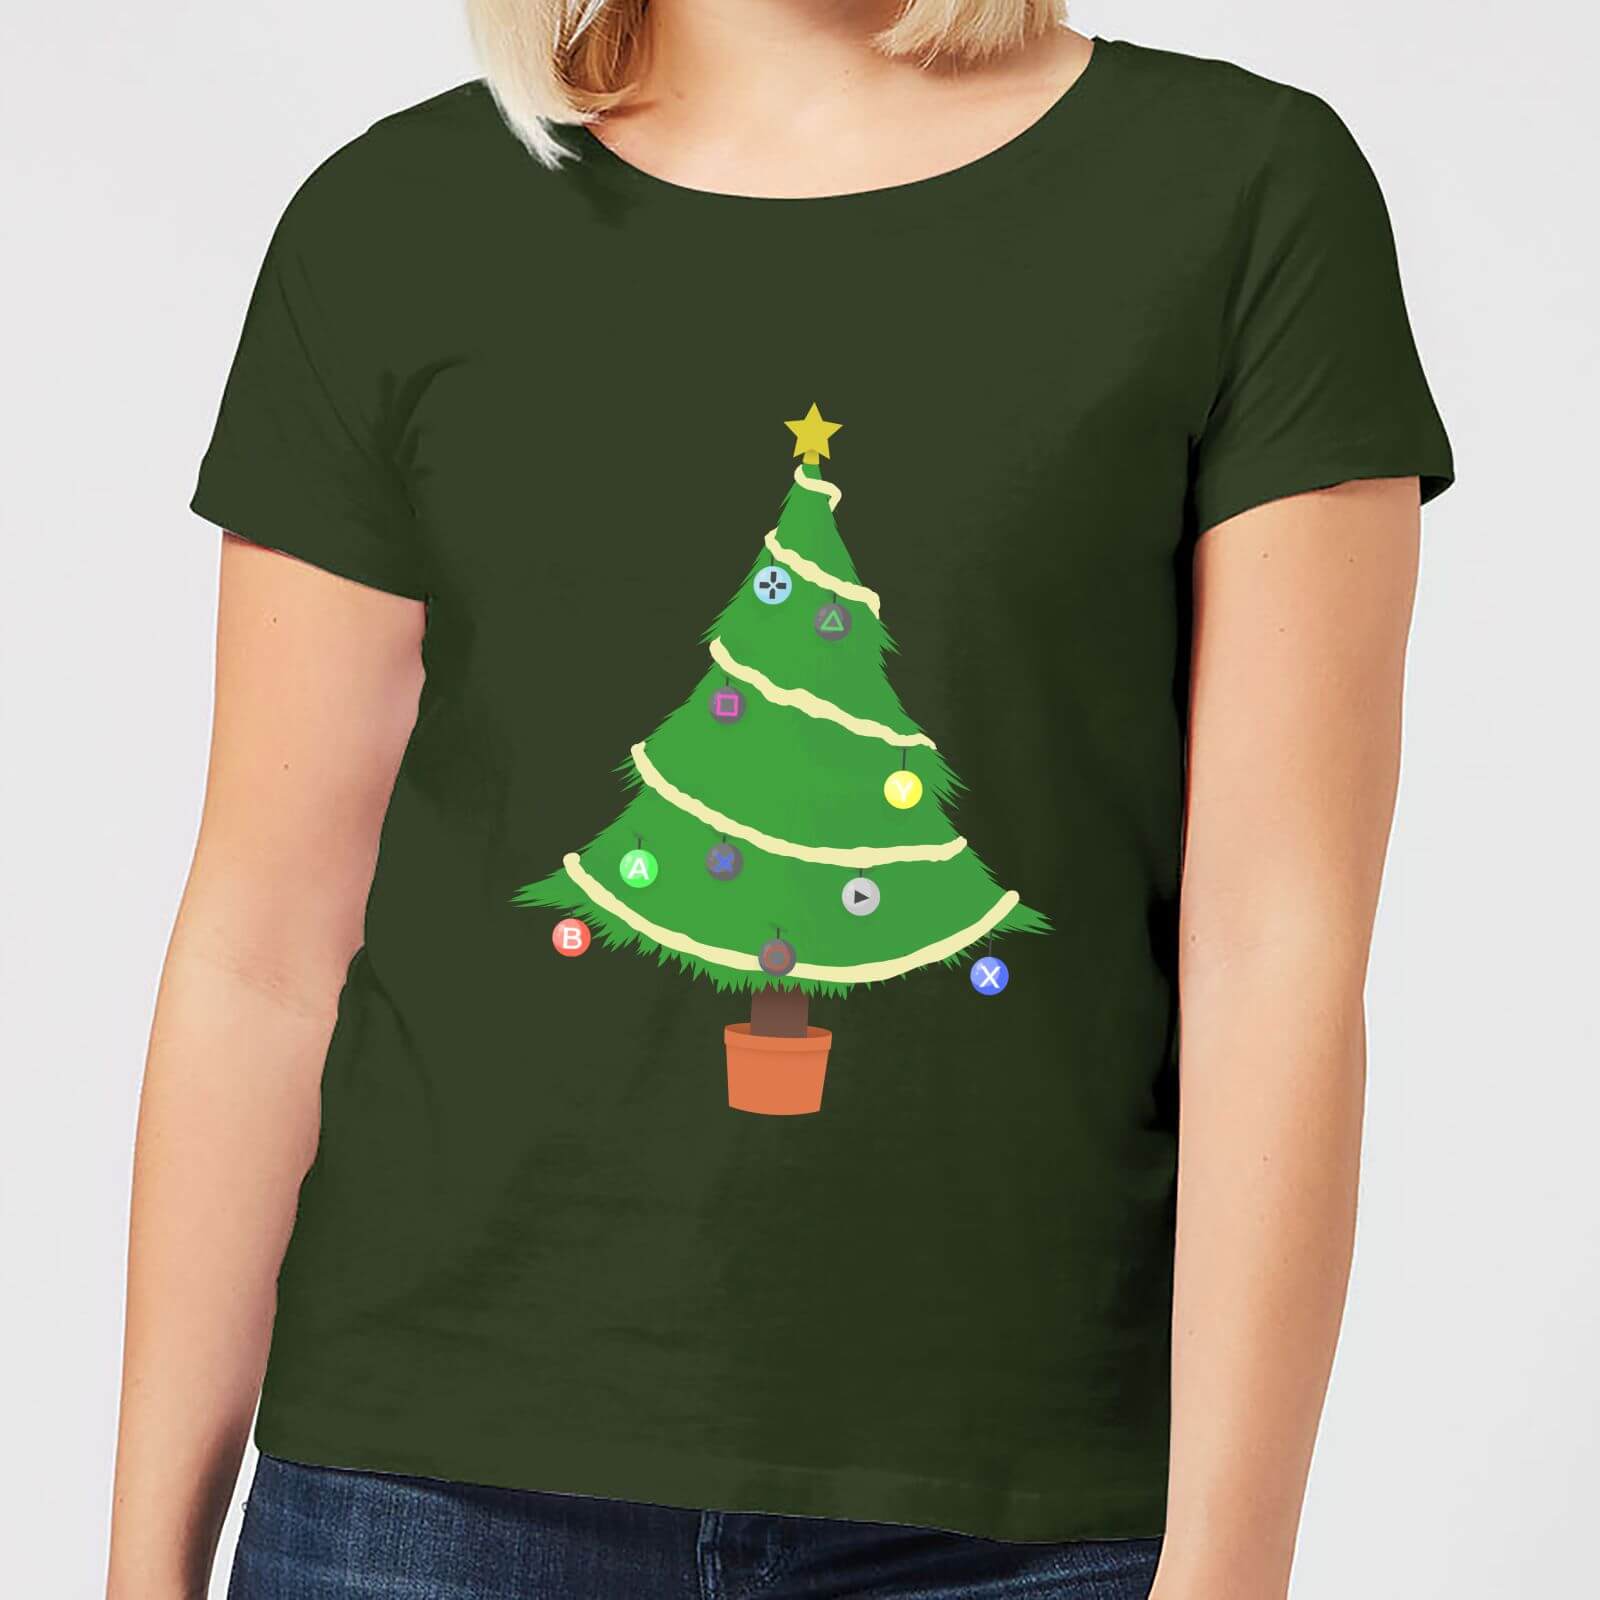 Buttons Tree Women's T-Shirt - Forest Green - M - Forest Green